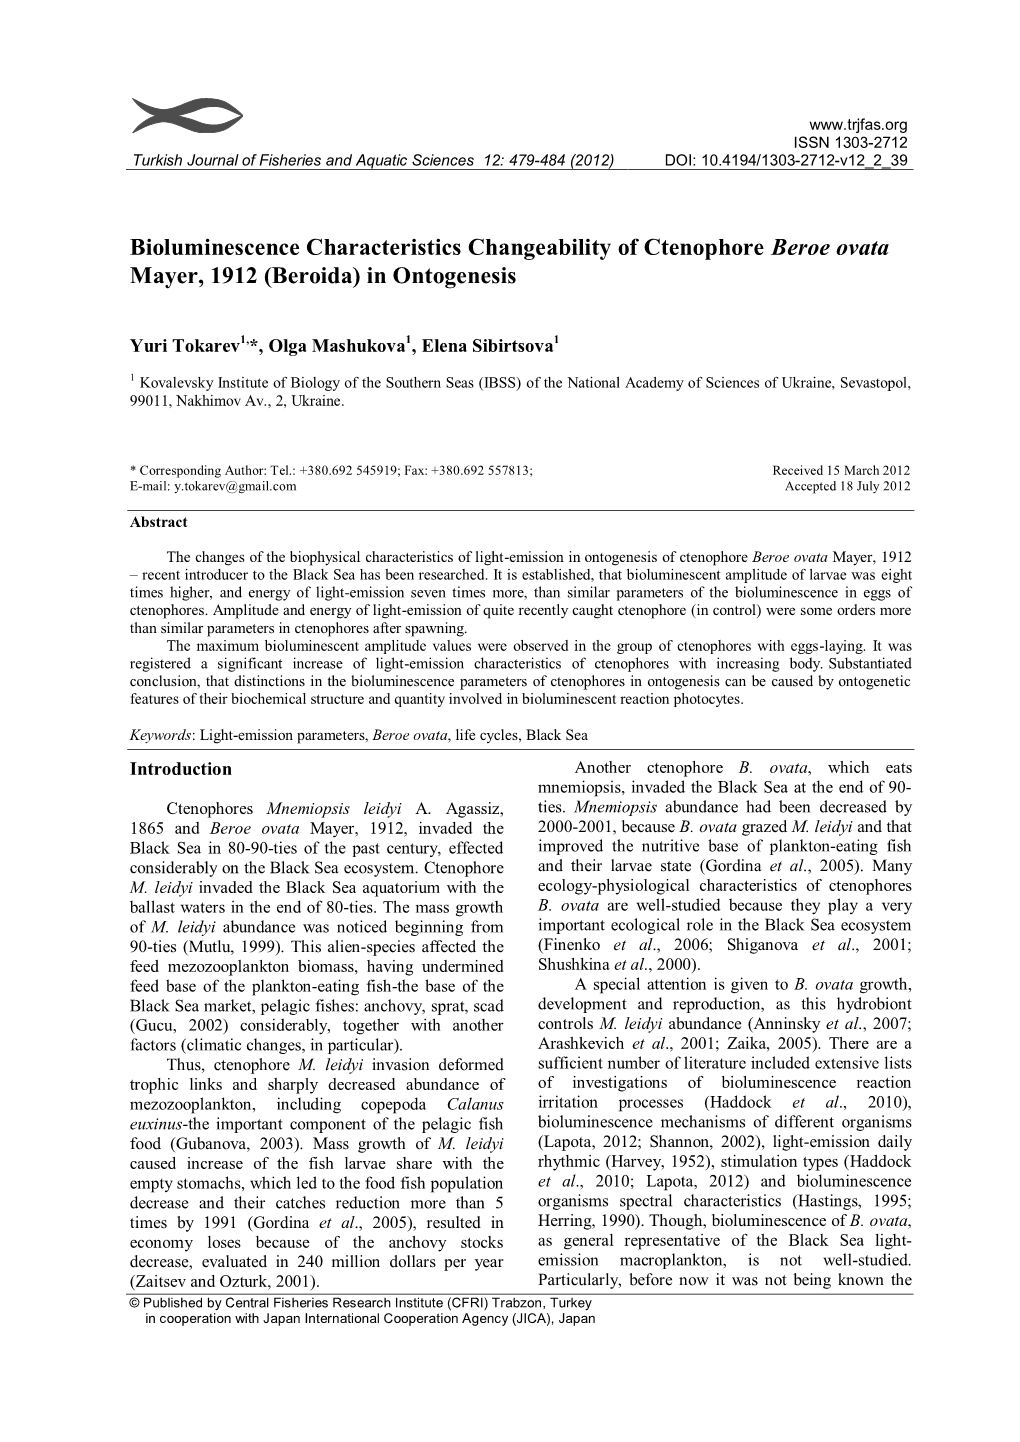 Bioluminescence Characteristics Changeability of Ctenophore Beroe Ovata Mayer, 1912 (Beroida) in Ontogenesis